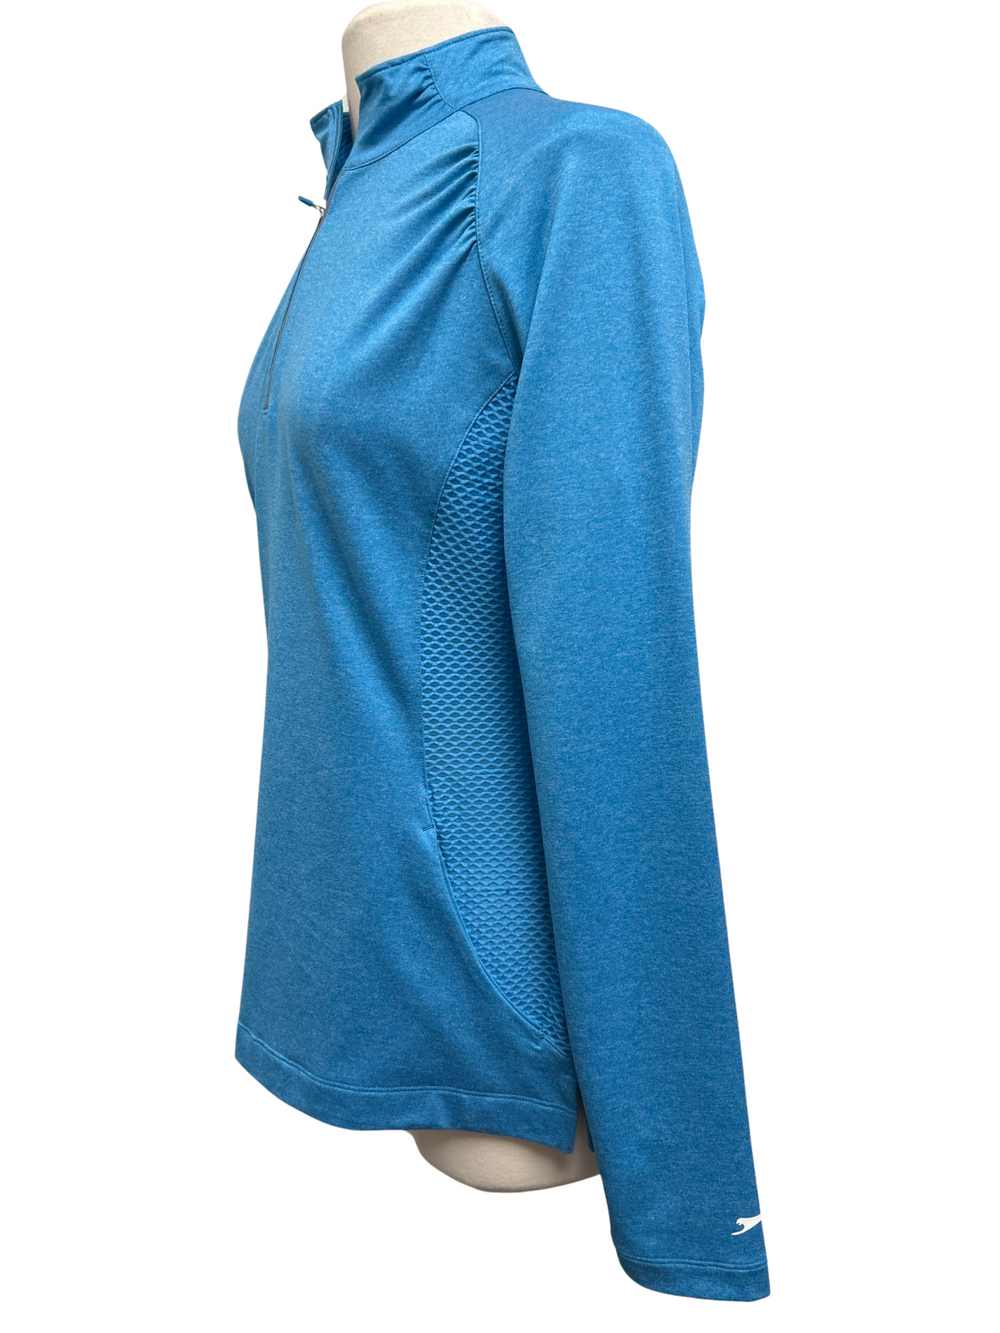 Slazenger Long Sleeve 1/2 Zip Pullover - Size L - Bright Blue - Skorzie